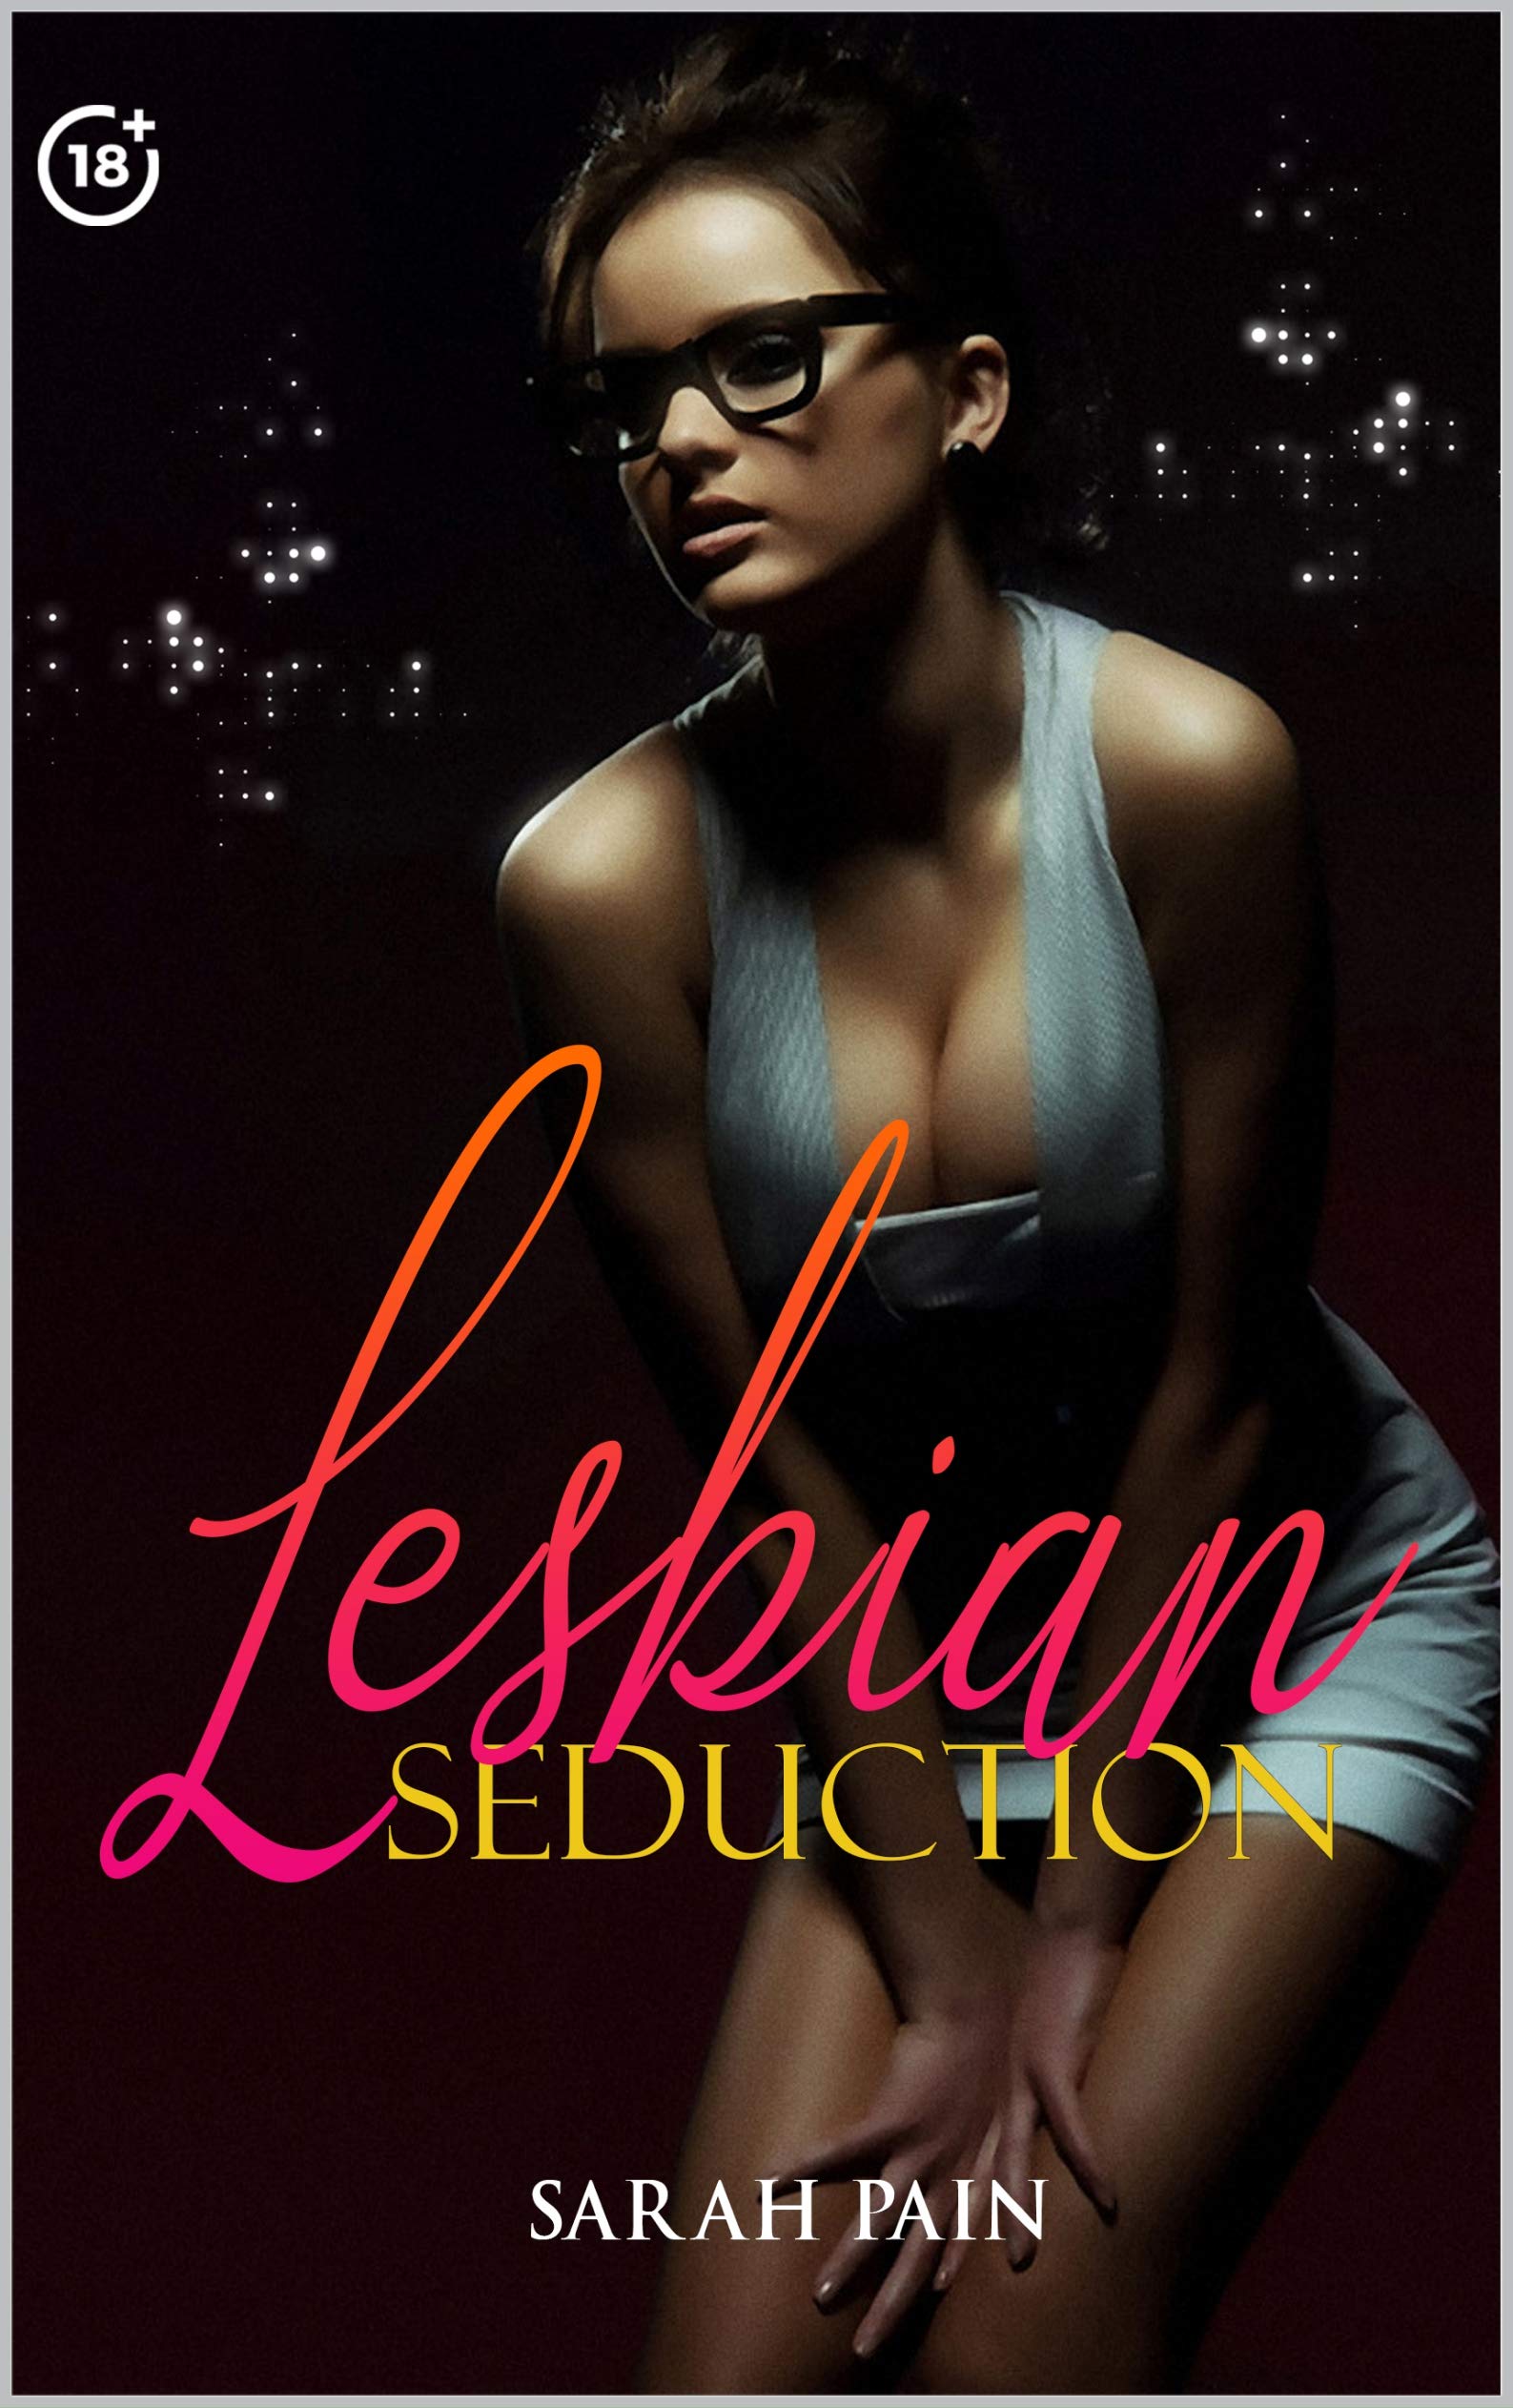 daniel secker recommends seducing lesbian stories pic